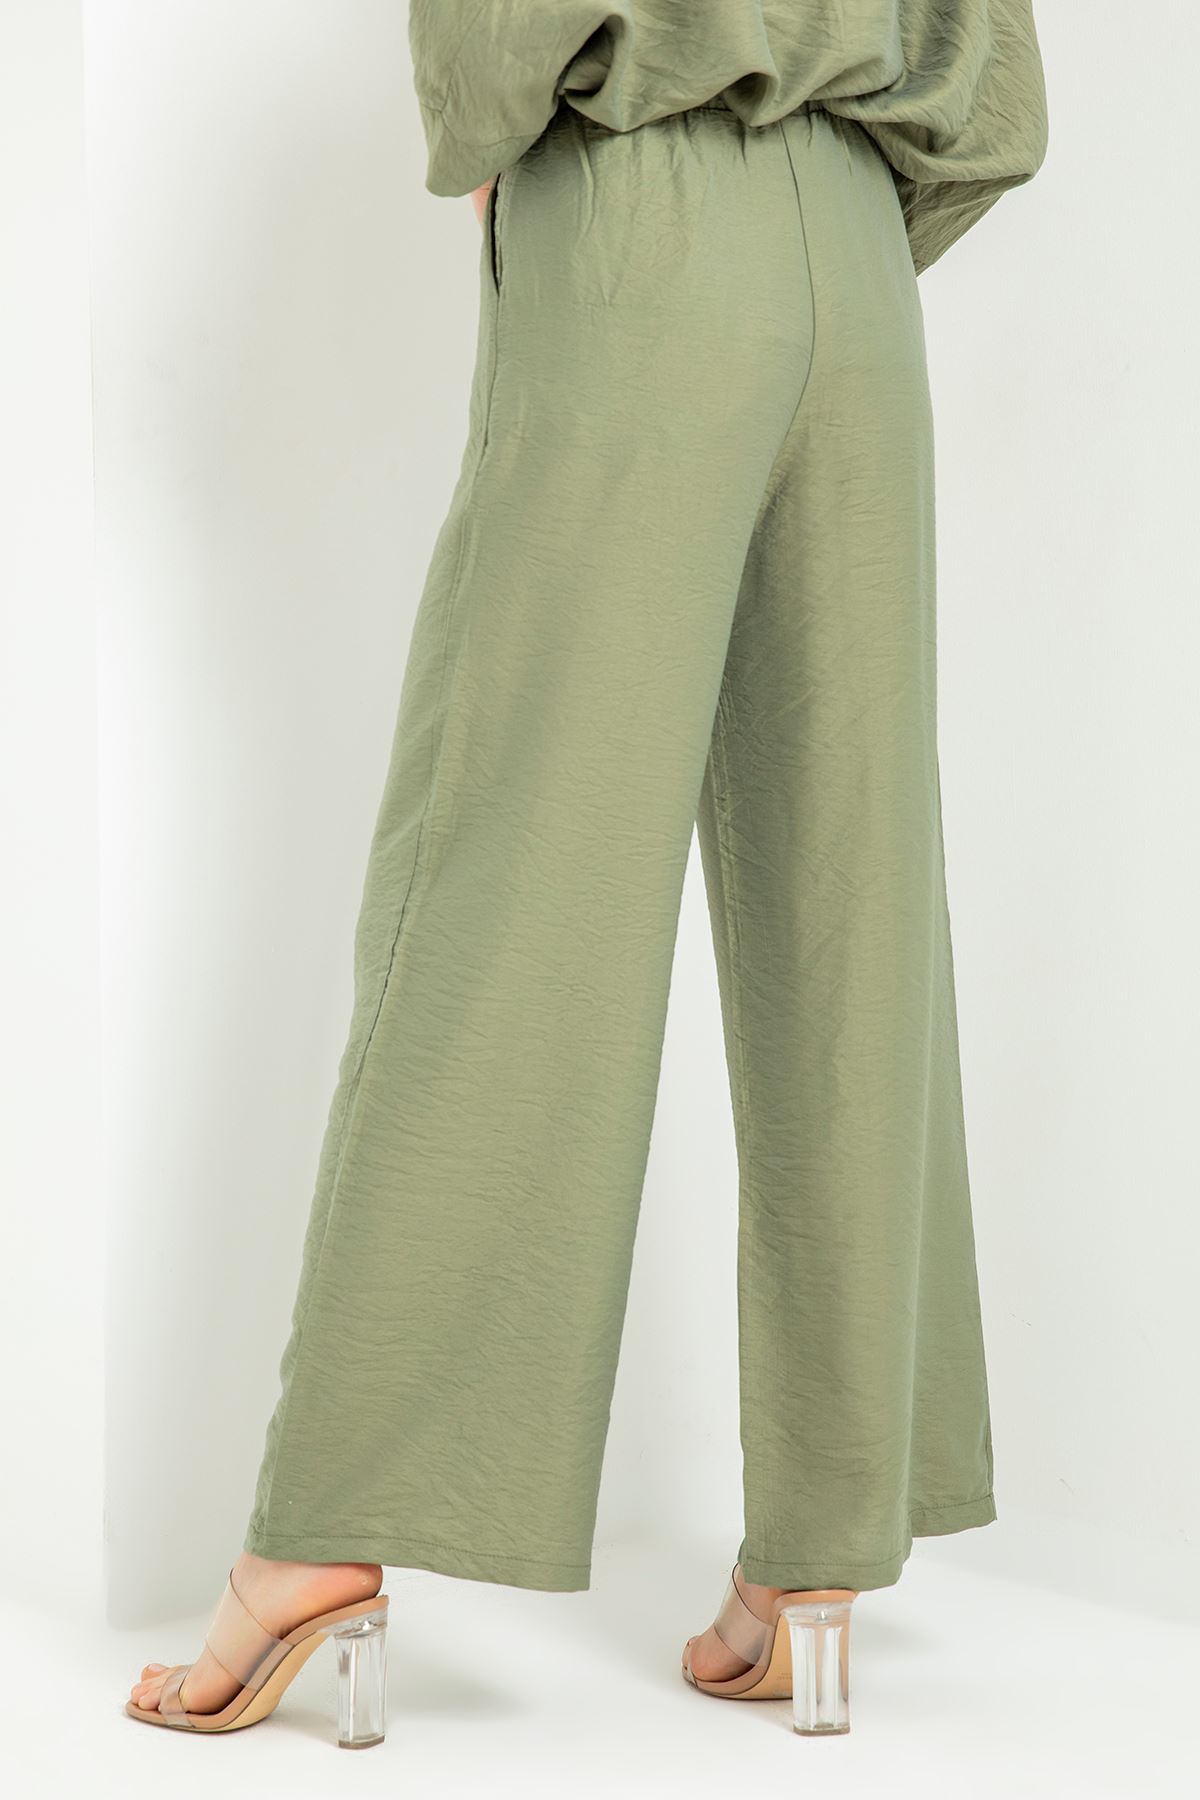 Aerobin Fabric Long Wide Elastic Waist Women'S Trouser - Khaki 